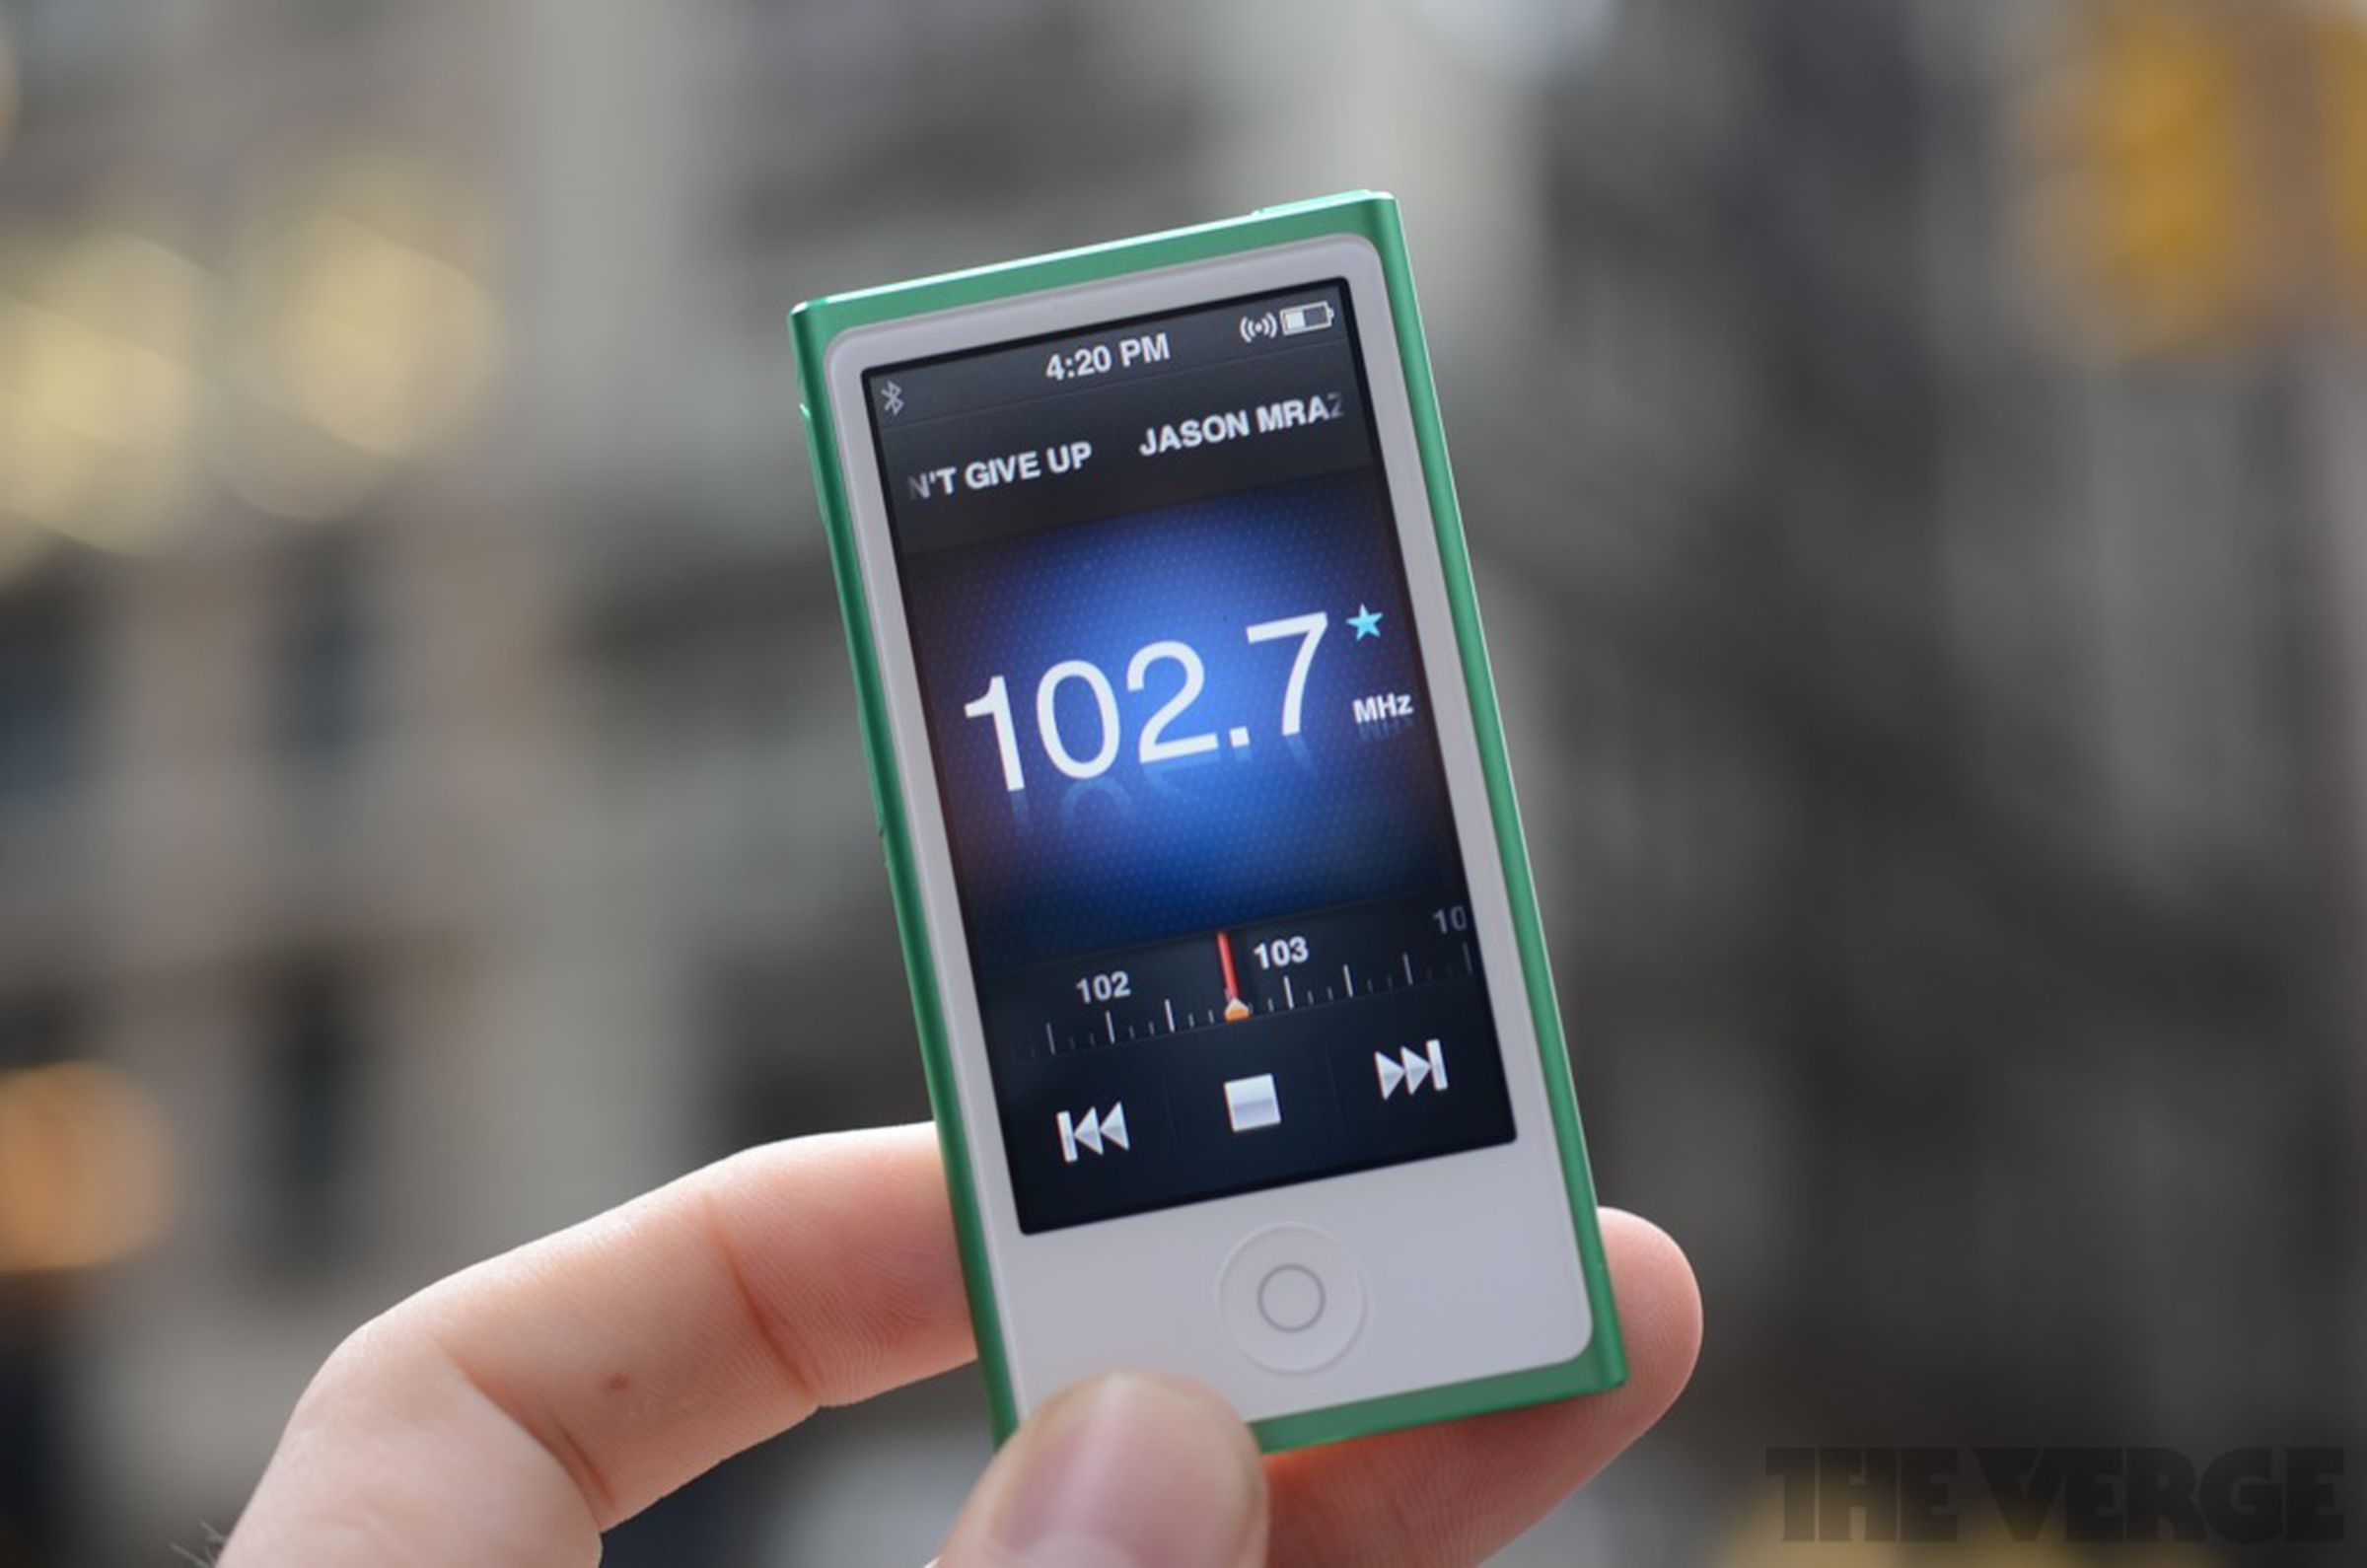 iPod nano pictures (2012)